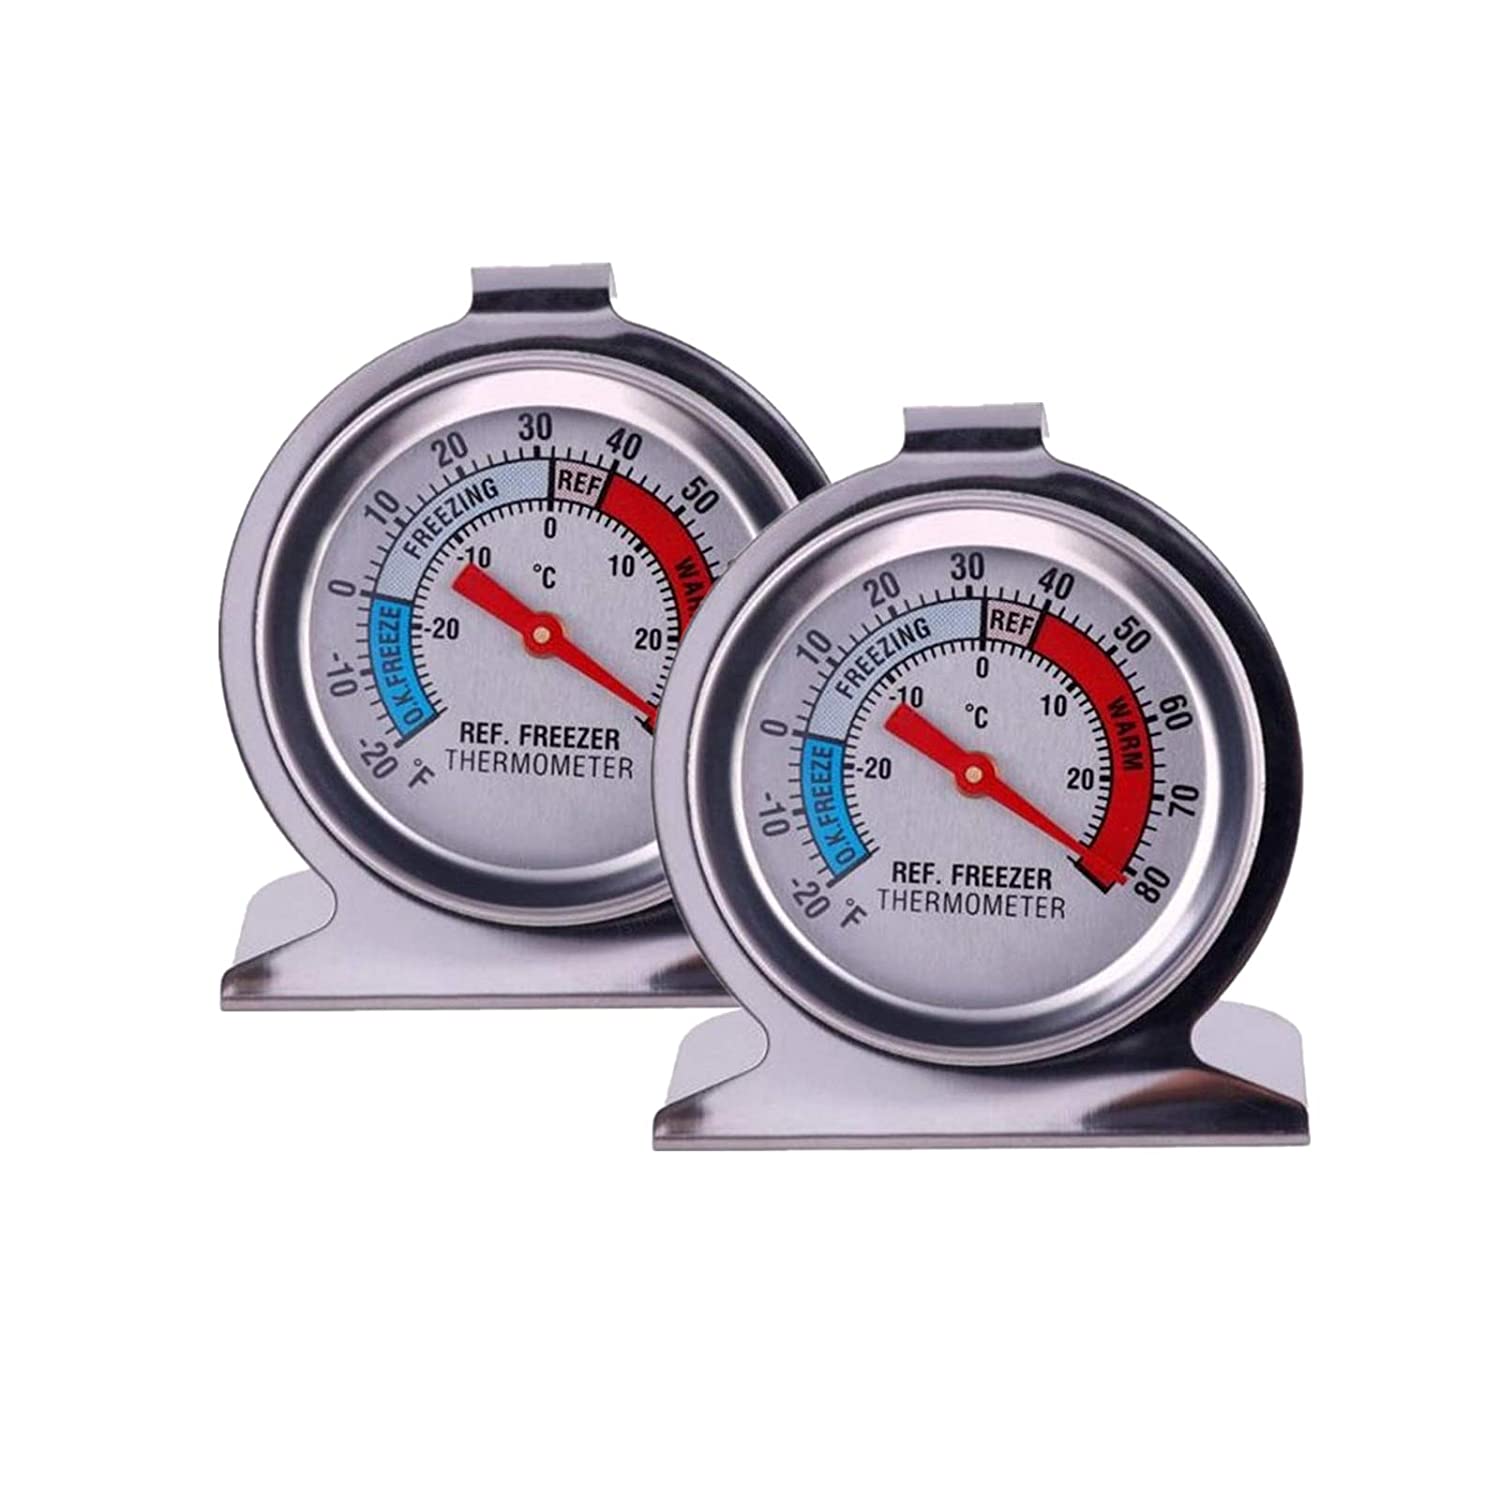 https://www.dontwasteyourmoney.com/wp-content/uploads/2021/01/jsdoin-large-dial-refridgerator-thermometer-2-pack-refrigerator-thermometer.jpg